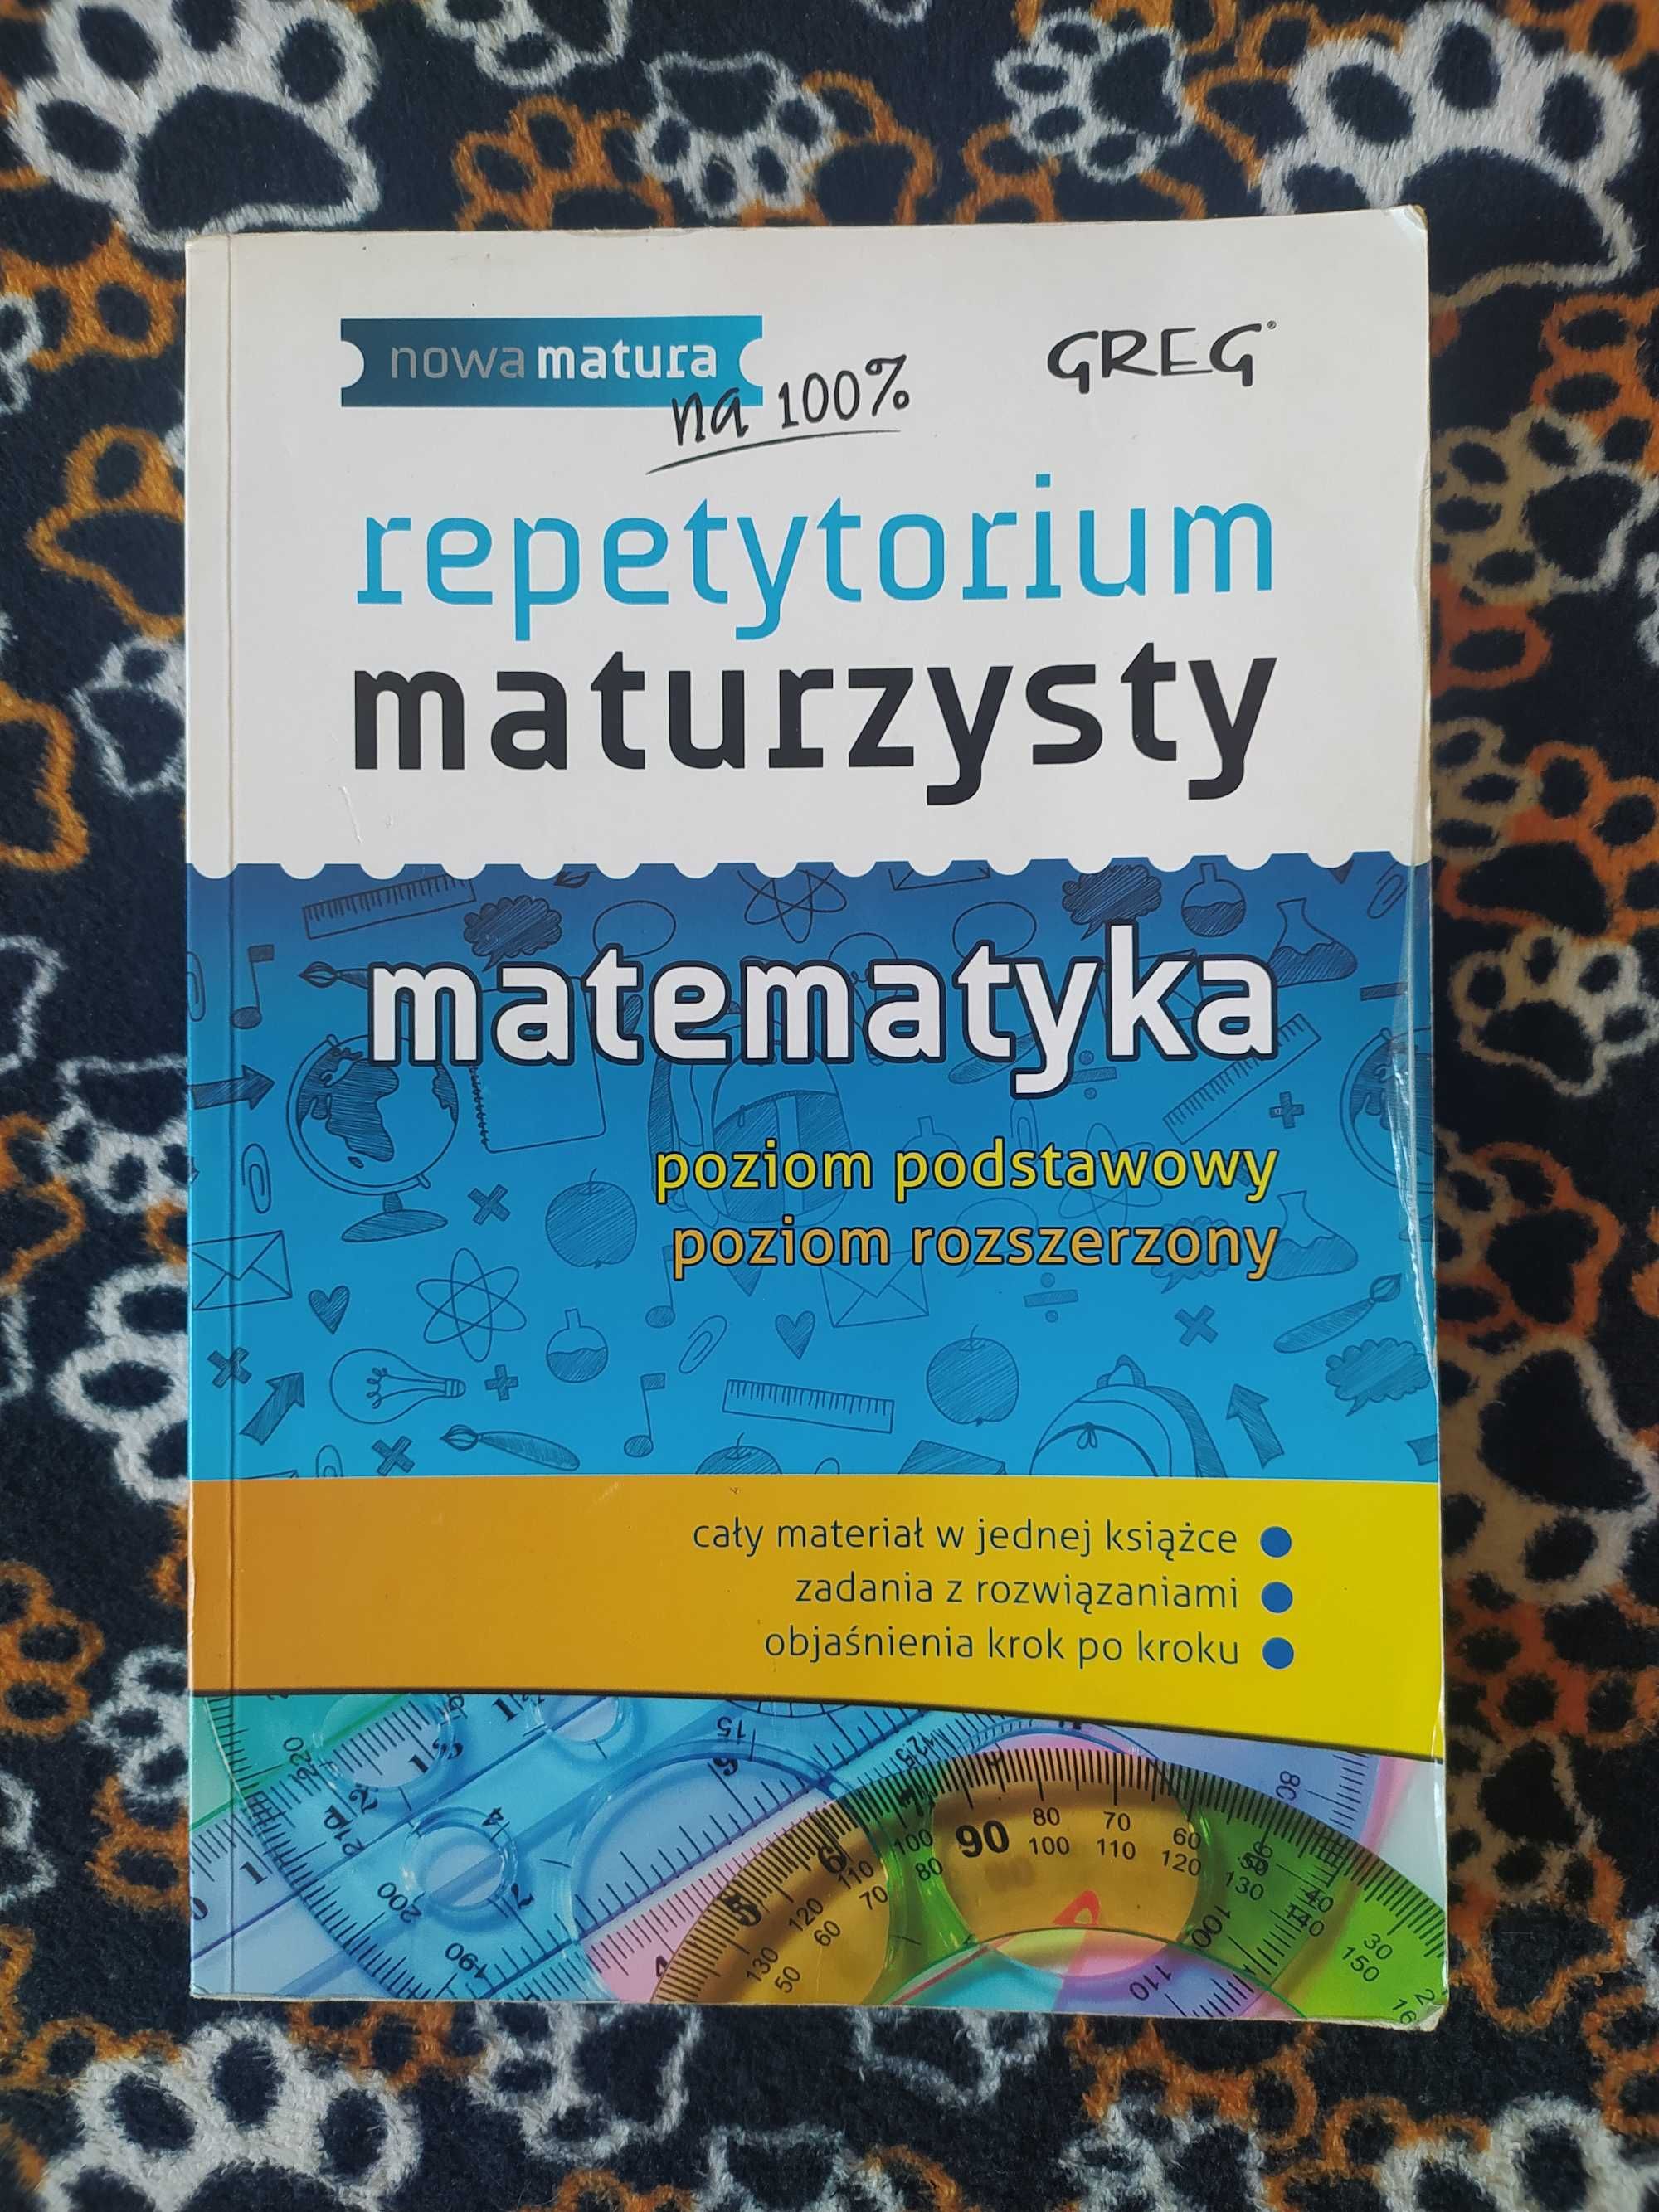 Repetytorium maturzysty - matematyka GREG (2015)